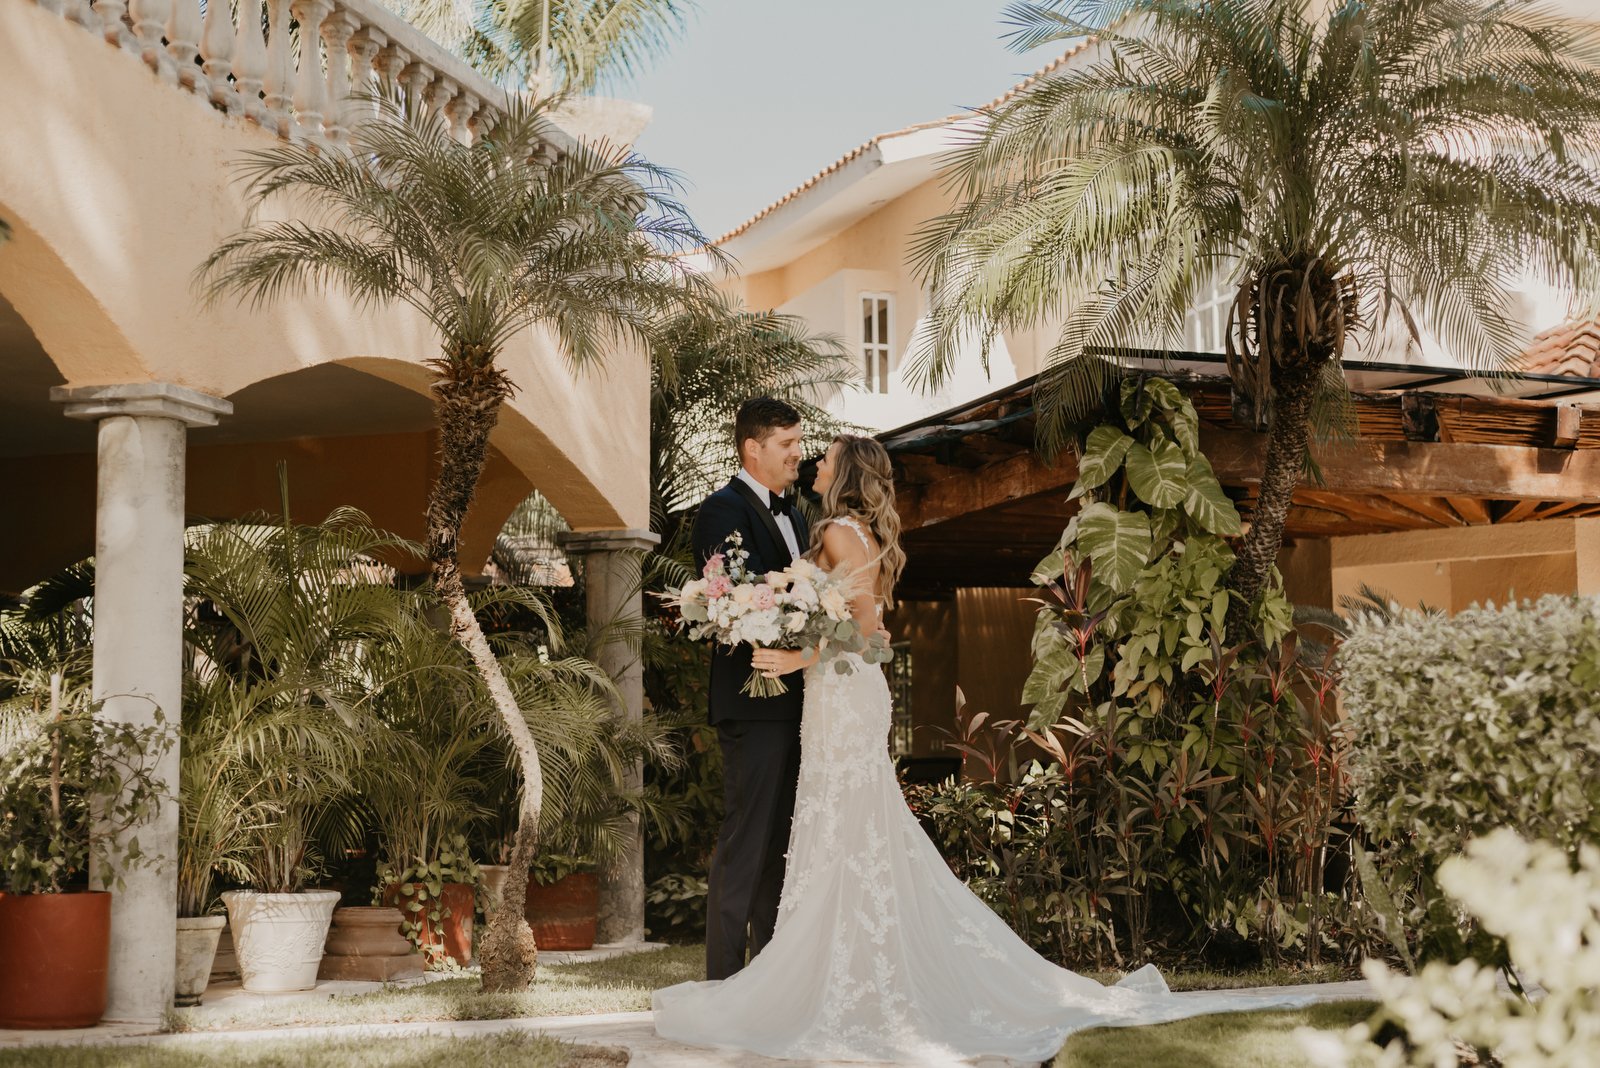 Family-Friendly-Destination-Wedding-Villa-La-Joya-Mexico-M-K-023.JPG